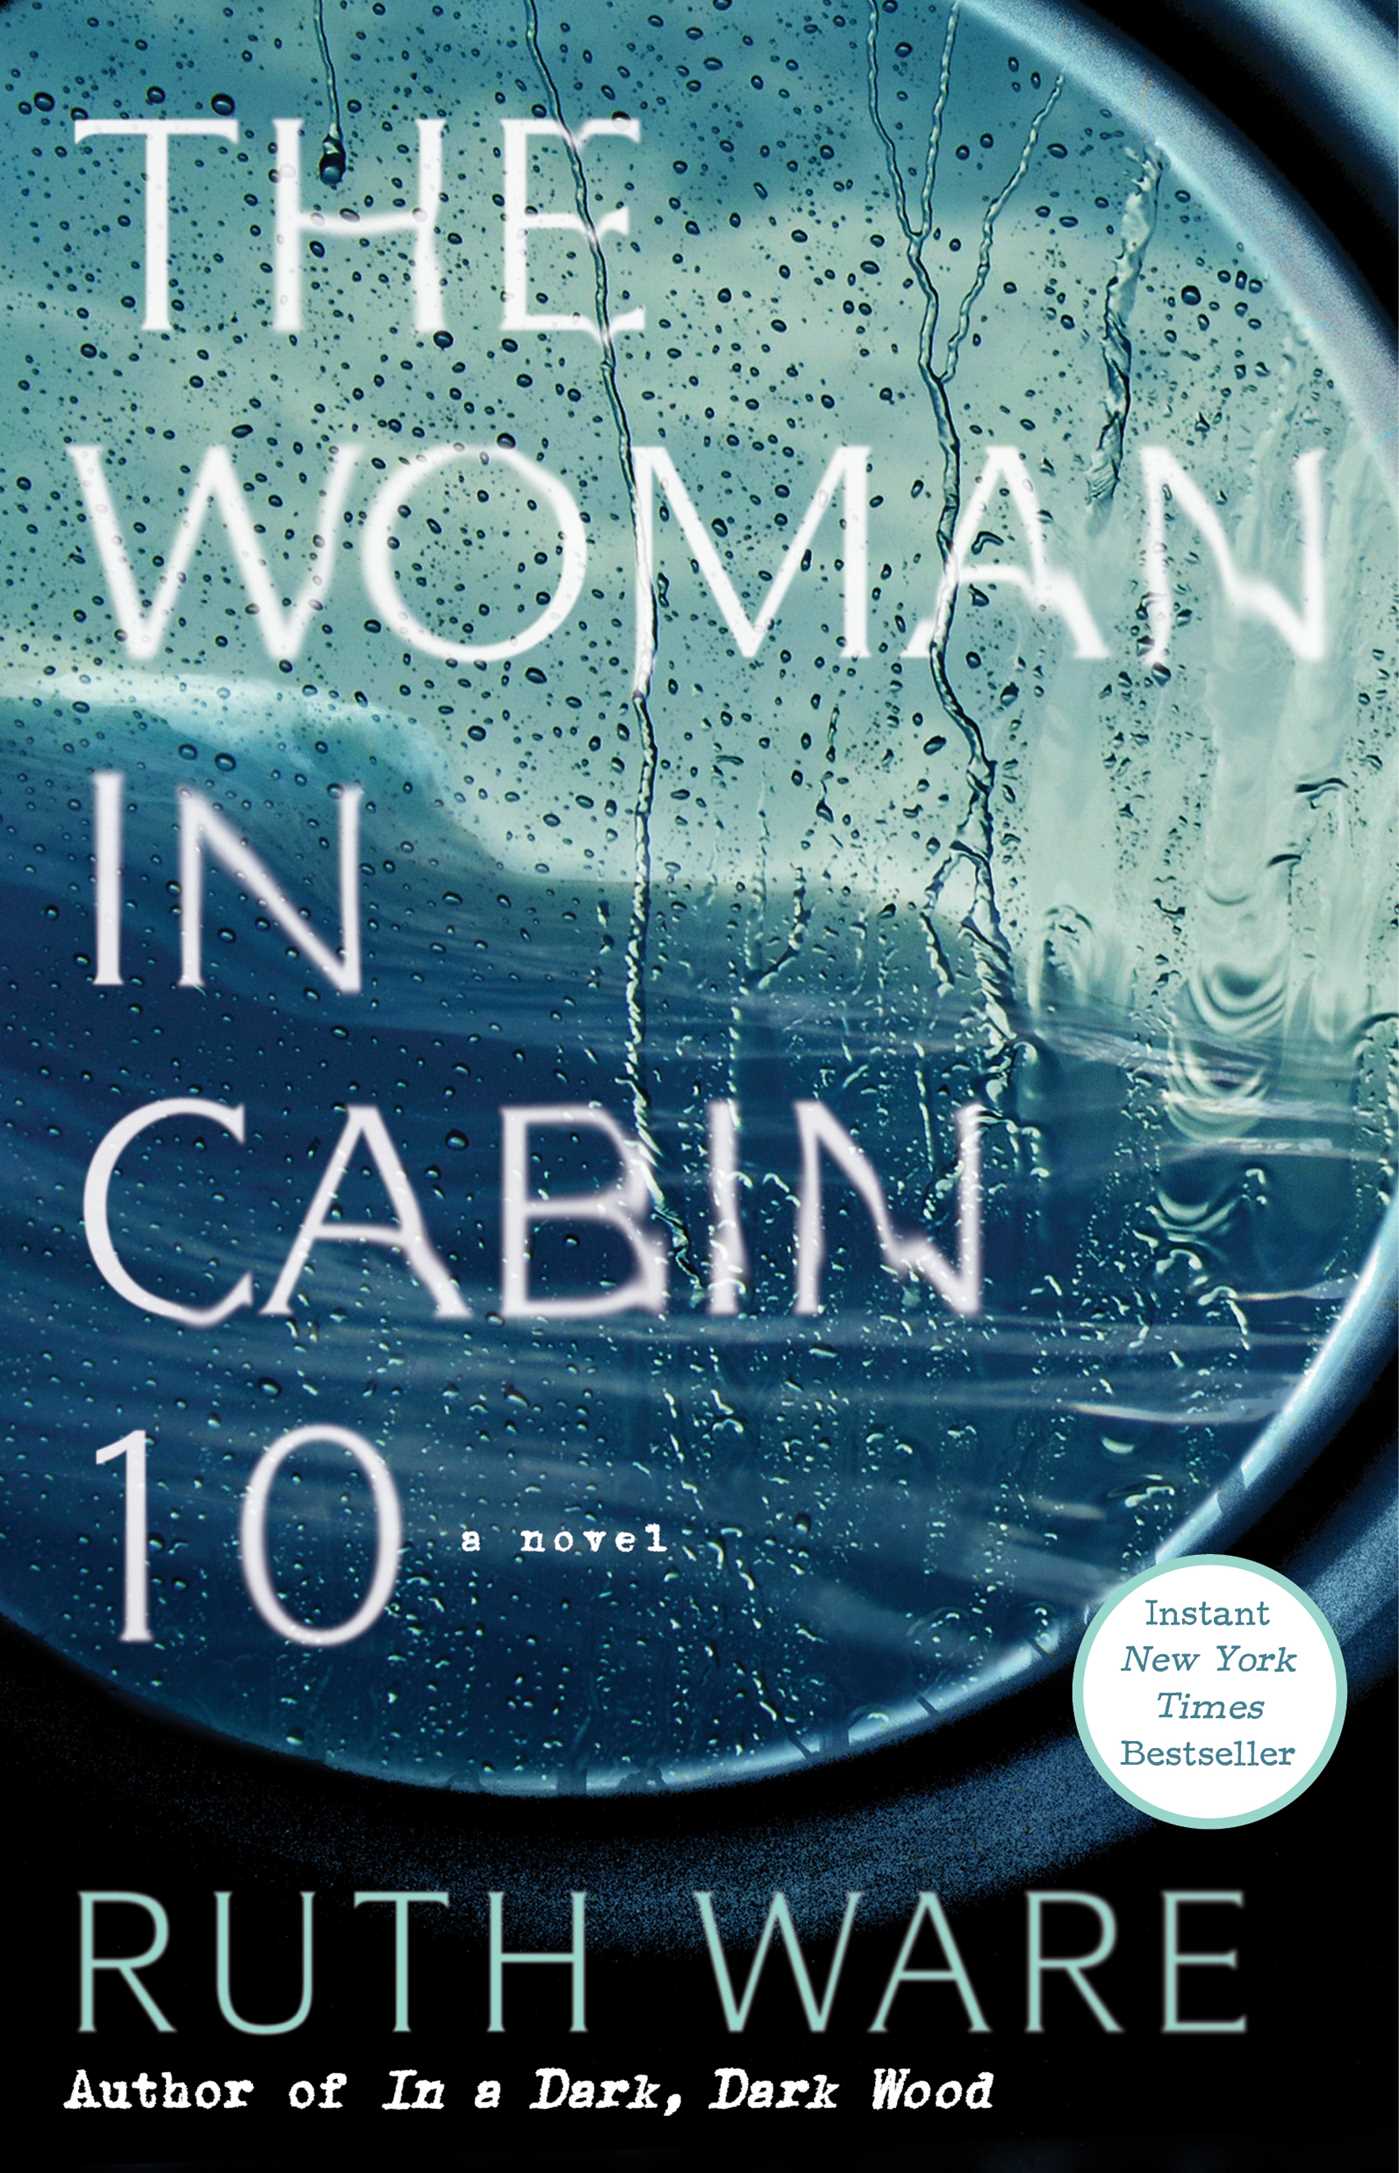 Woman In Cabin 10 - Ruth Ware